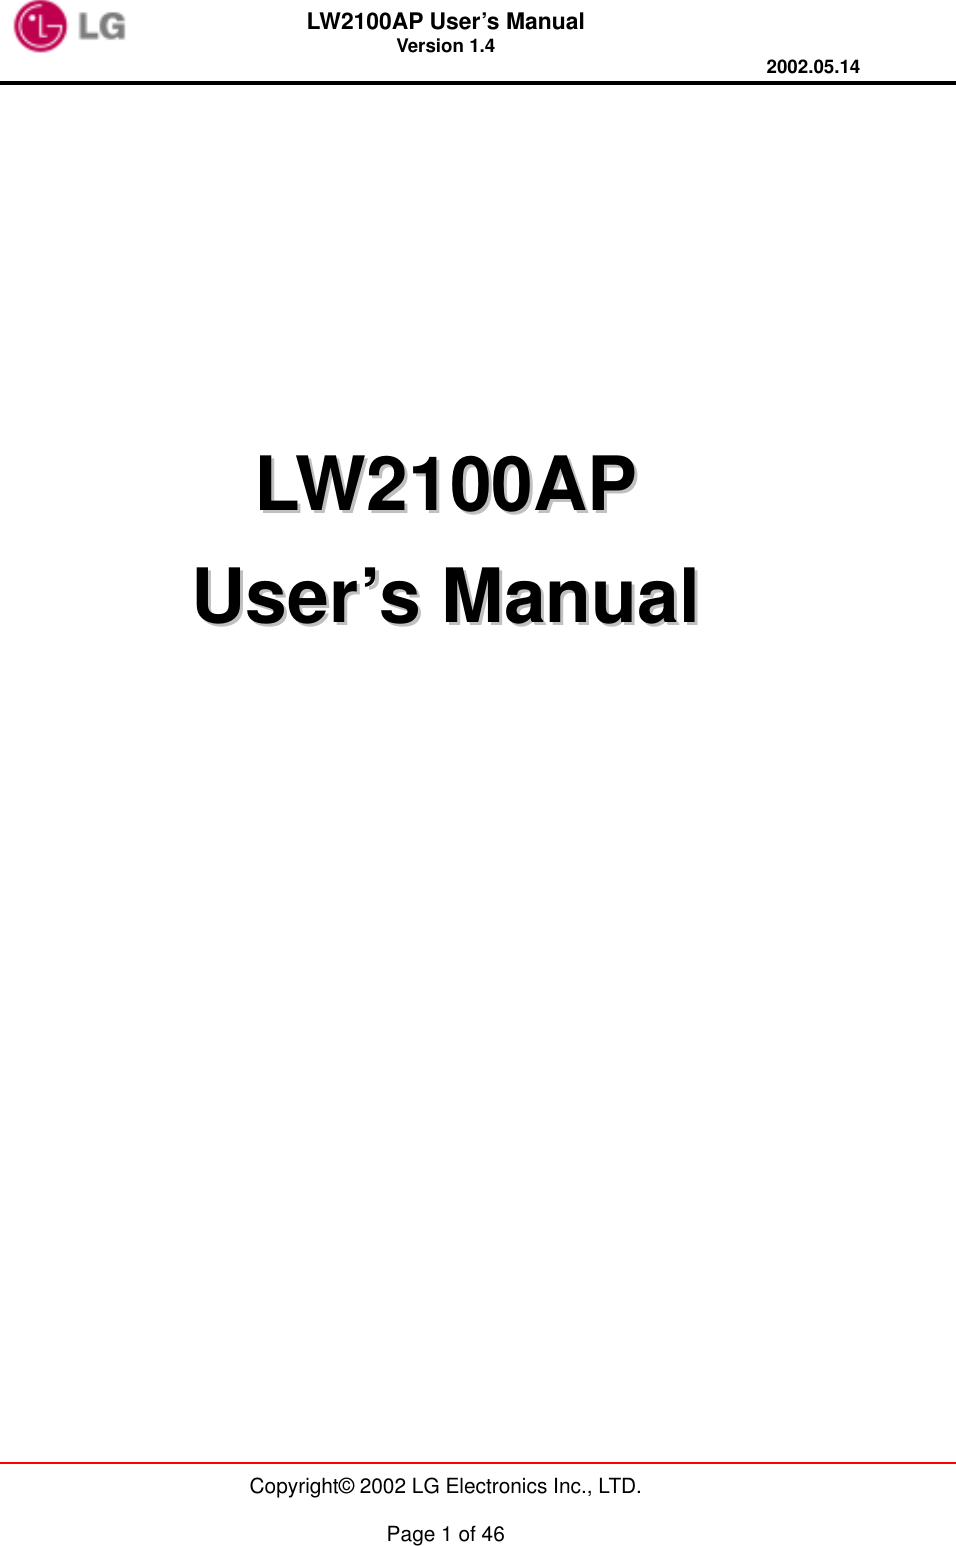 LW2100AP User’s Manual Version 1.4 2002.05.14   Copyright© 2002 LG Electronics Inc., LTD.  Page 1 of 46        LLWW22110000AAPP  UUsseerr’’ss  MMaannuuaall   